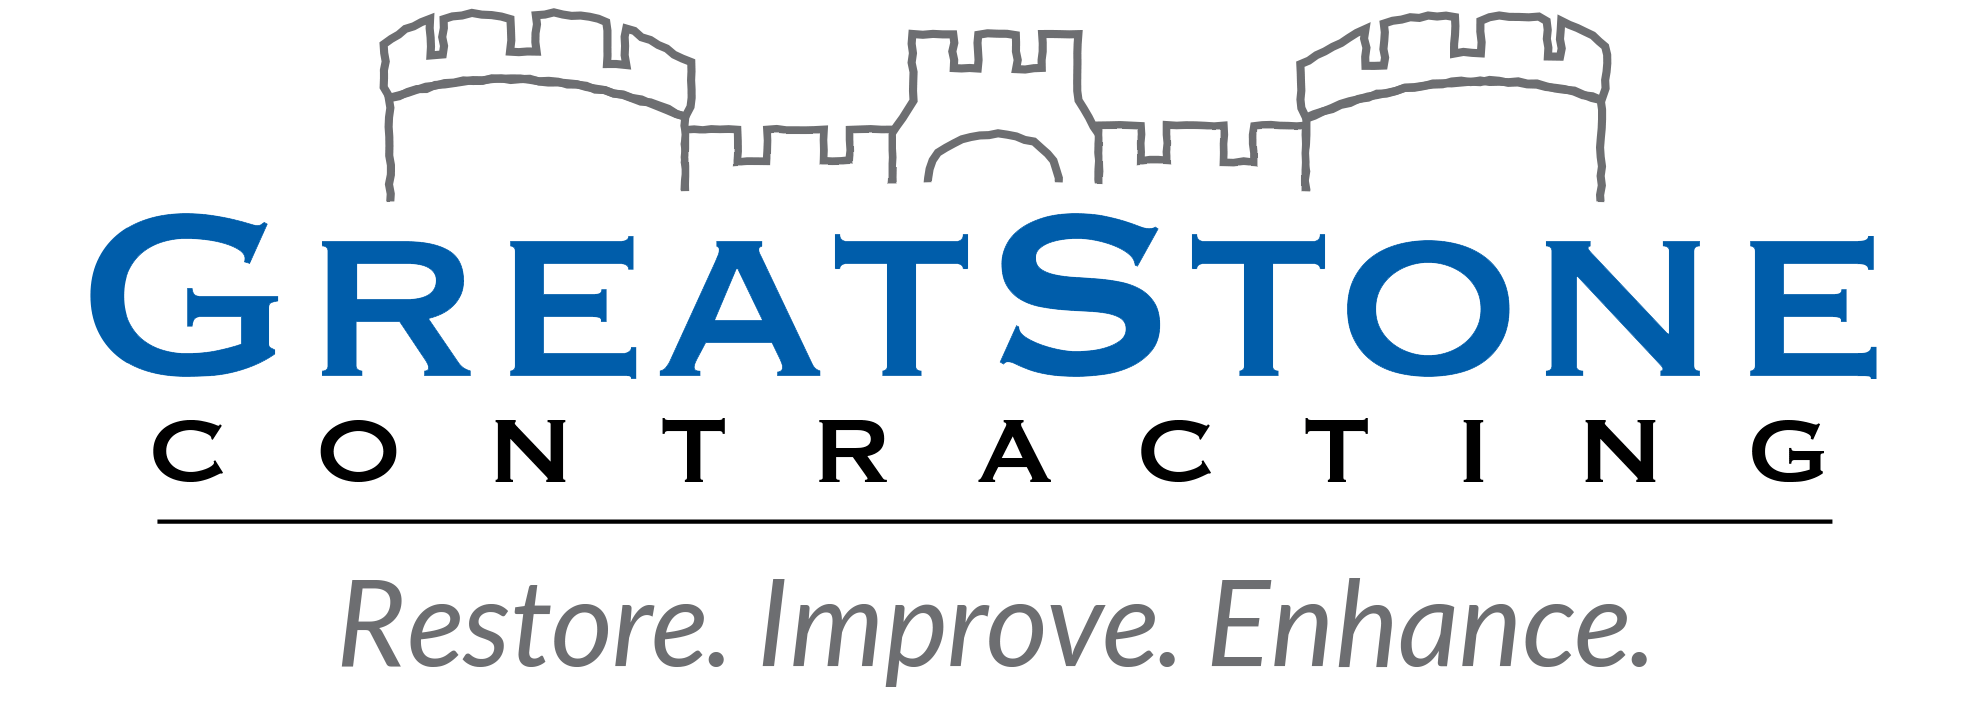 Greatstone Contracting Logo